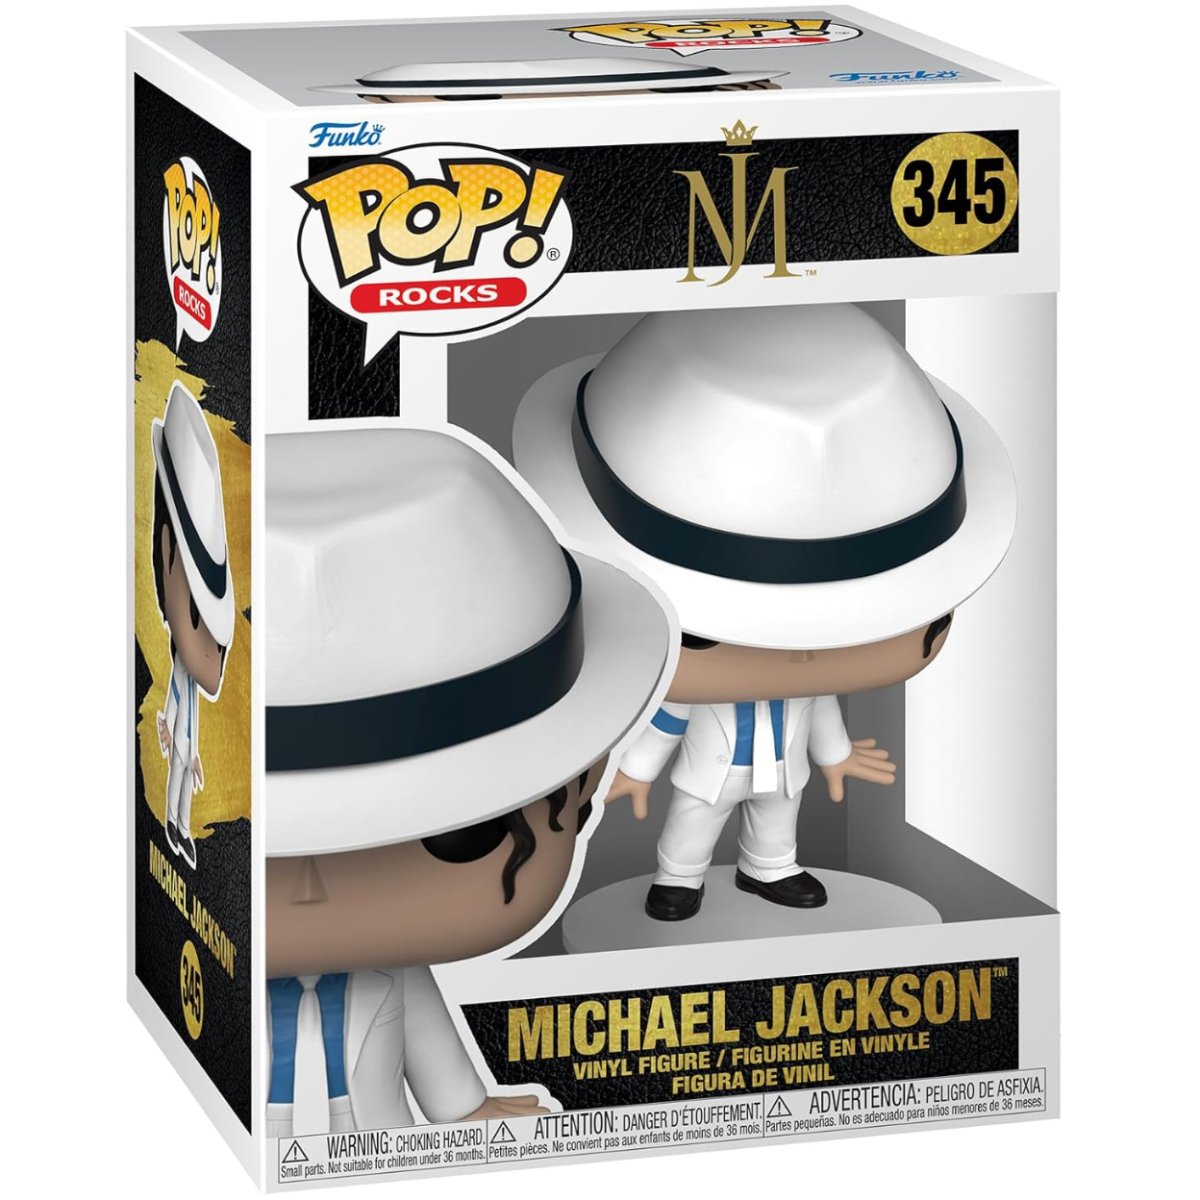 Michael Jackson - Michael Jackson [Smooth Criminal] #345 - Funko Pop! Vinyl Rocks - Persona Toys